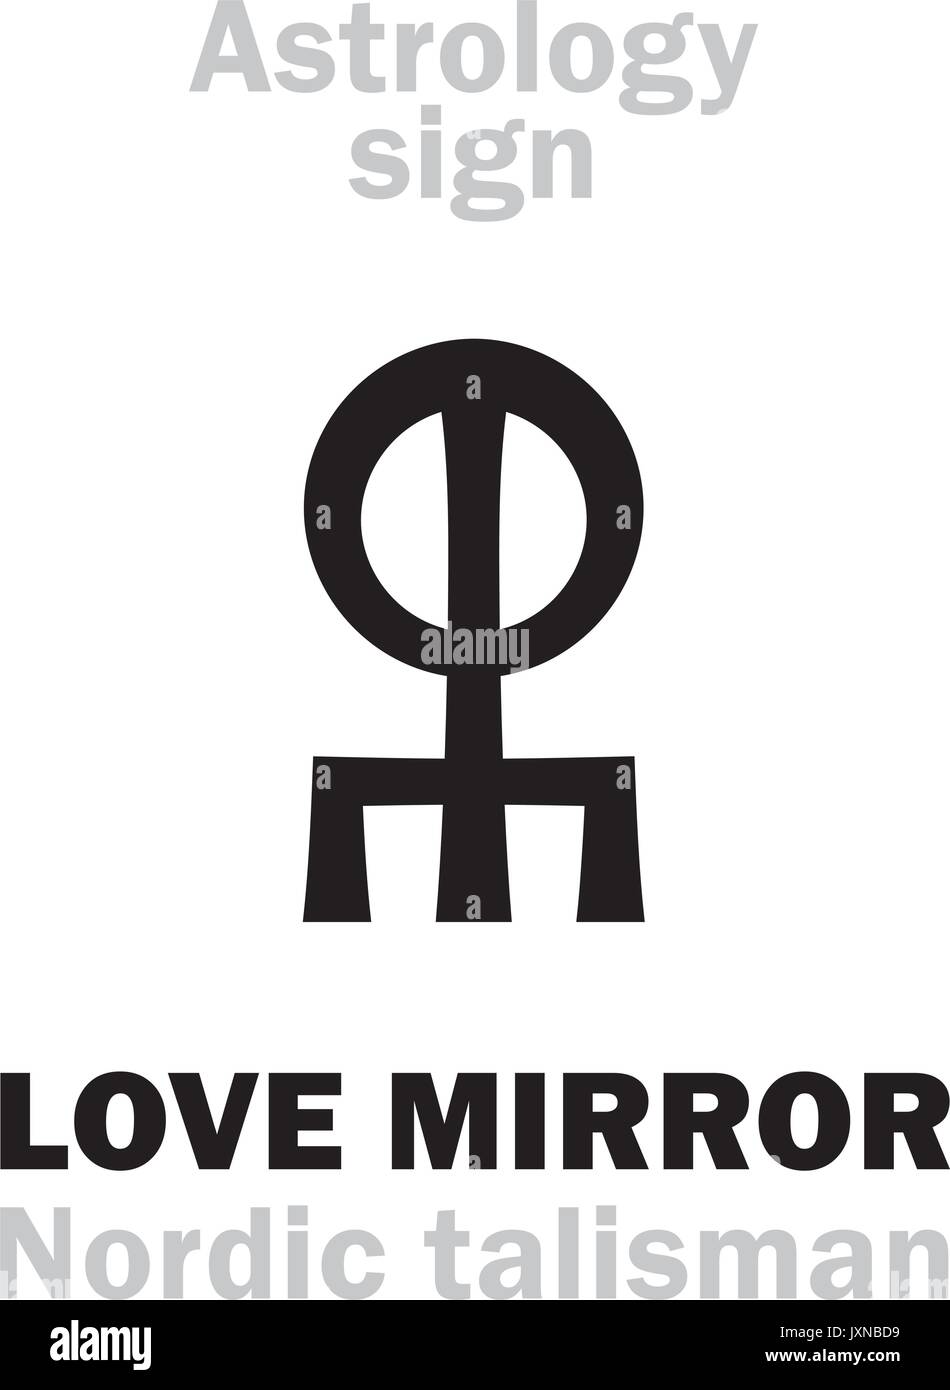 Astrology Alphabet: LOVE MIRROR (Nordic talisman). Hieroglyphics character sign (single symbol). Stock Vector